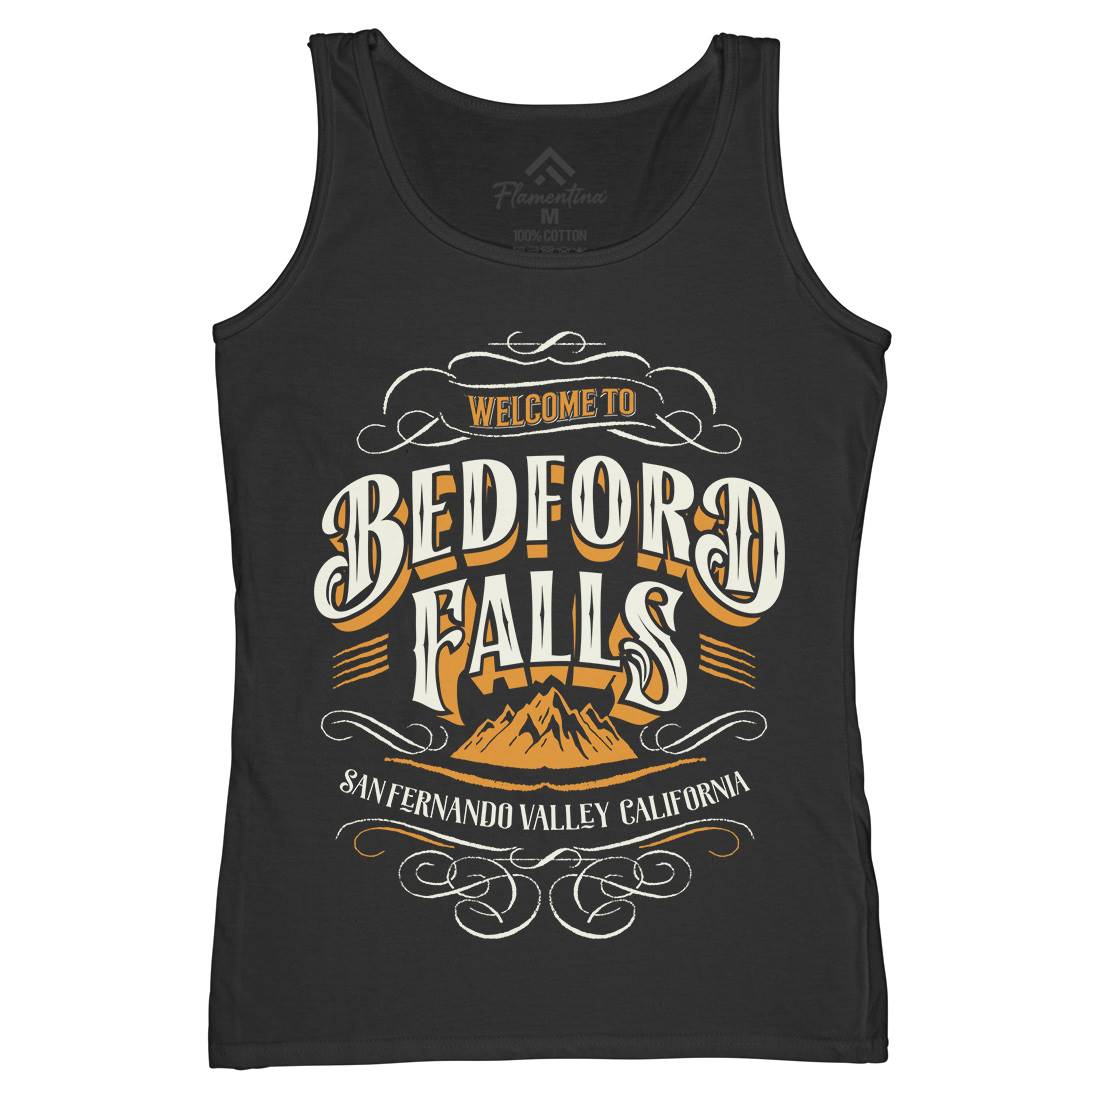 Bedford Falls Womens Organic Tank Top Vest Christmas D148